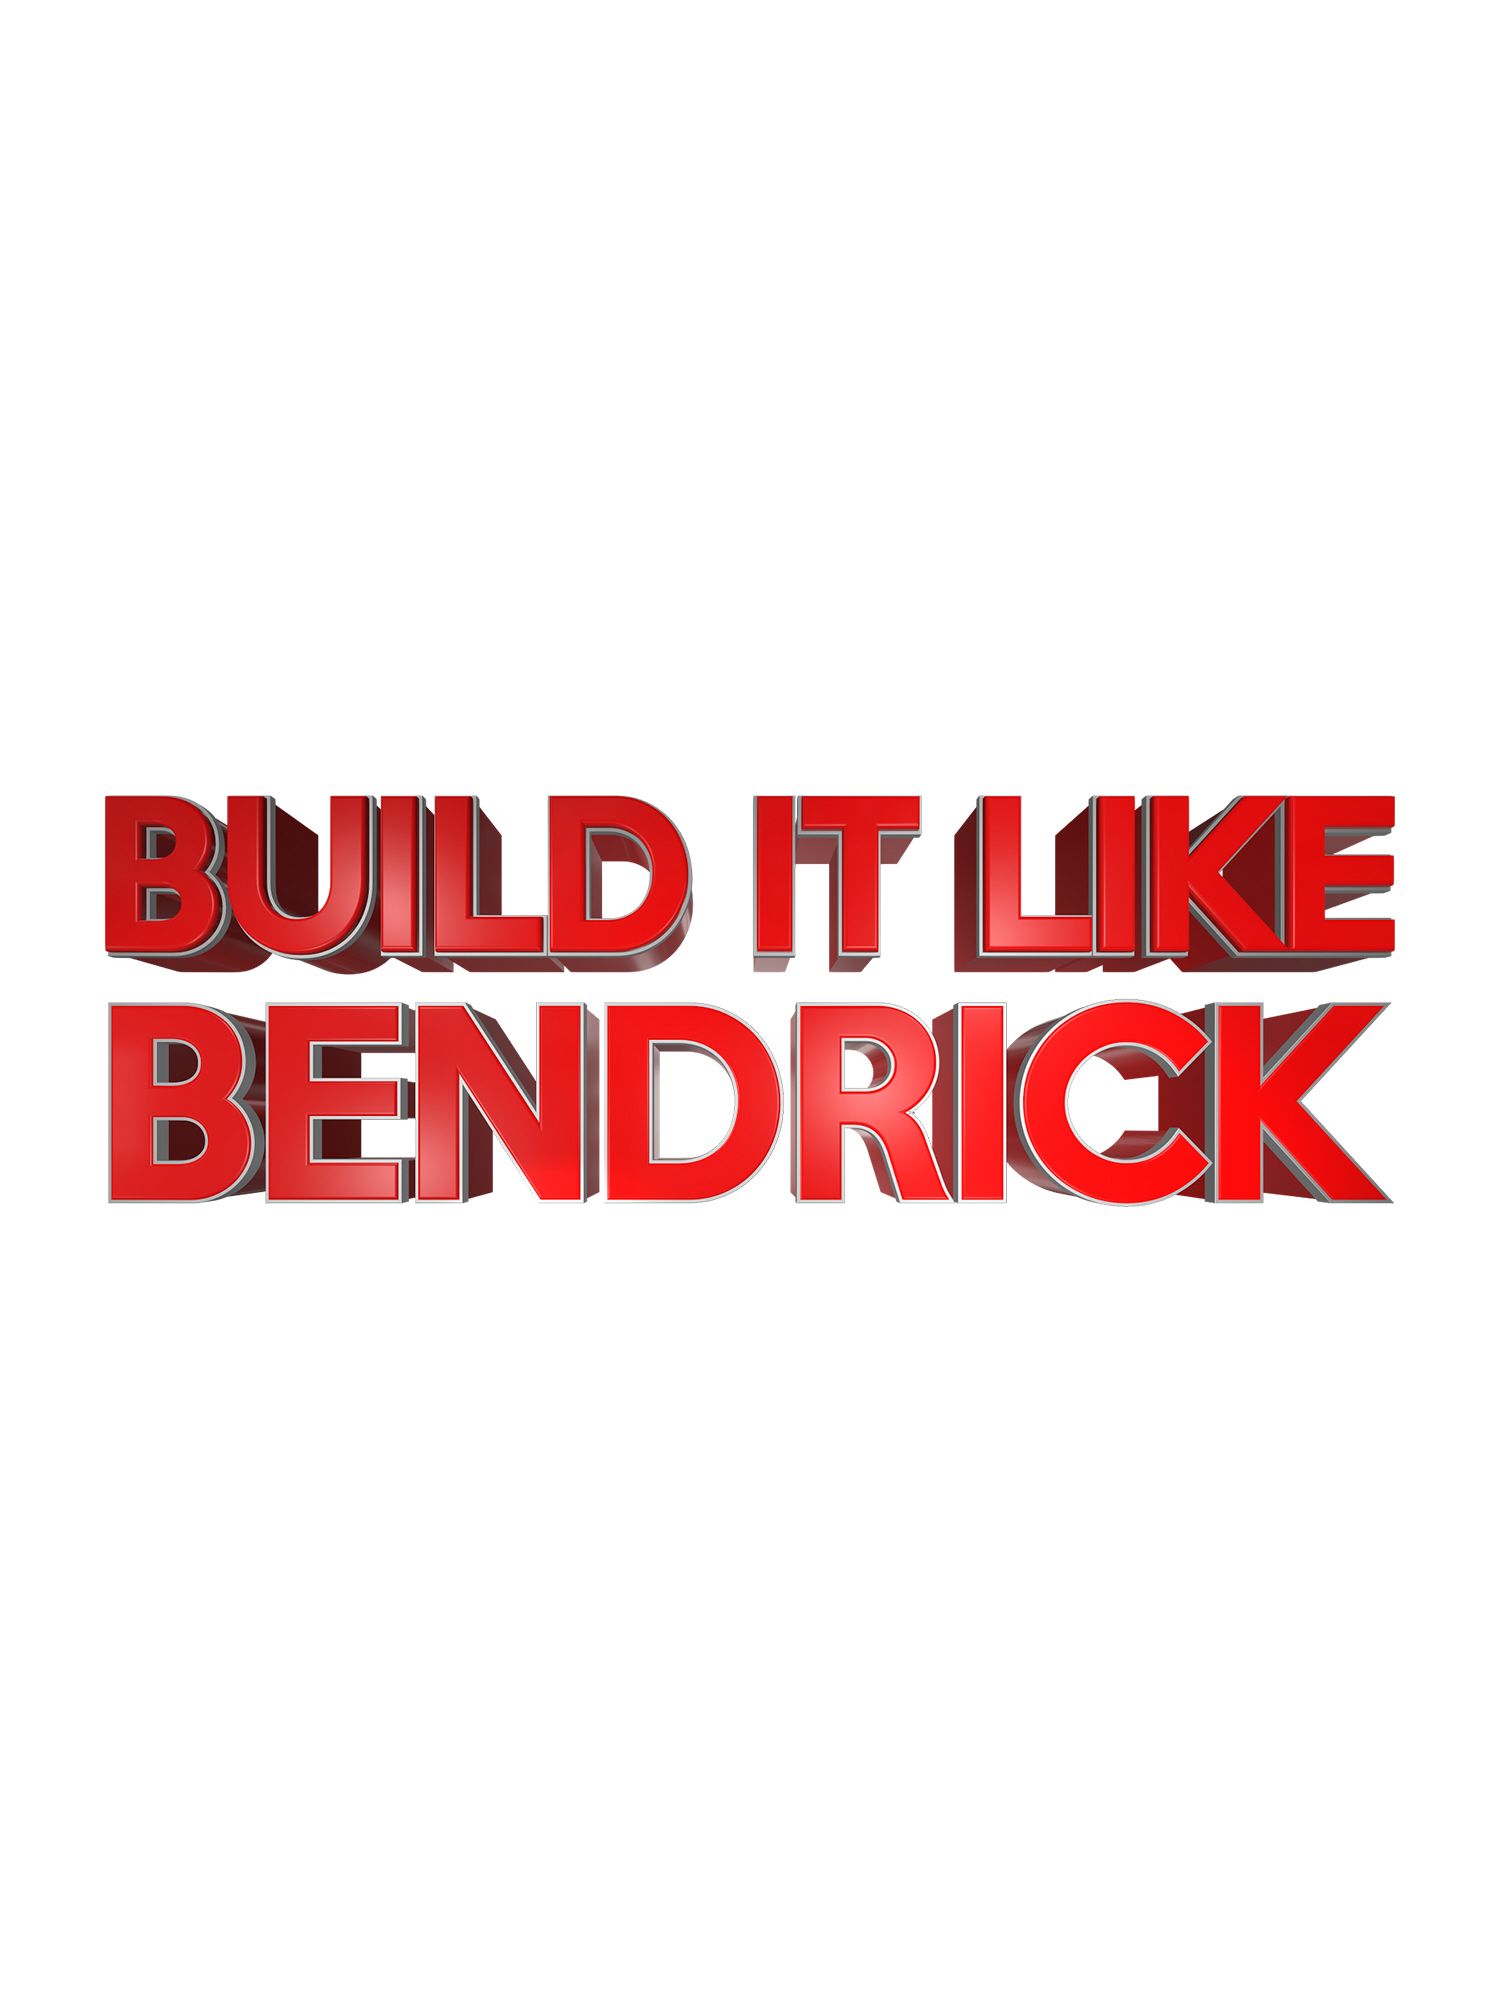 Build it like Bendrick